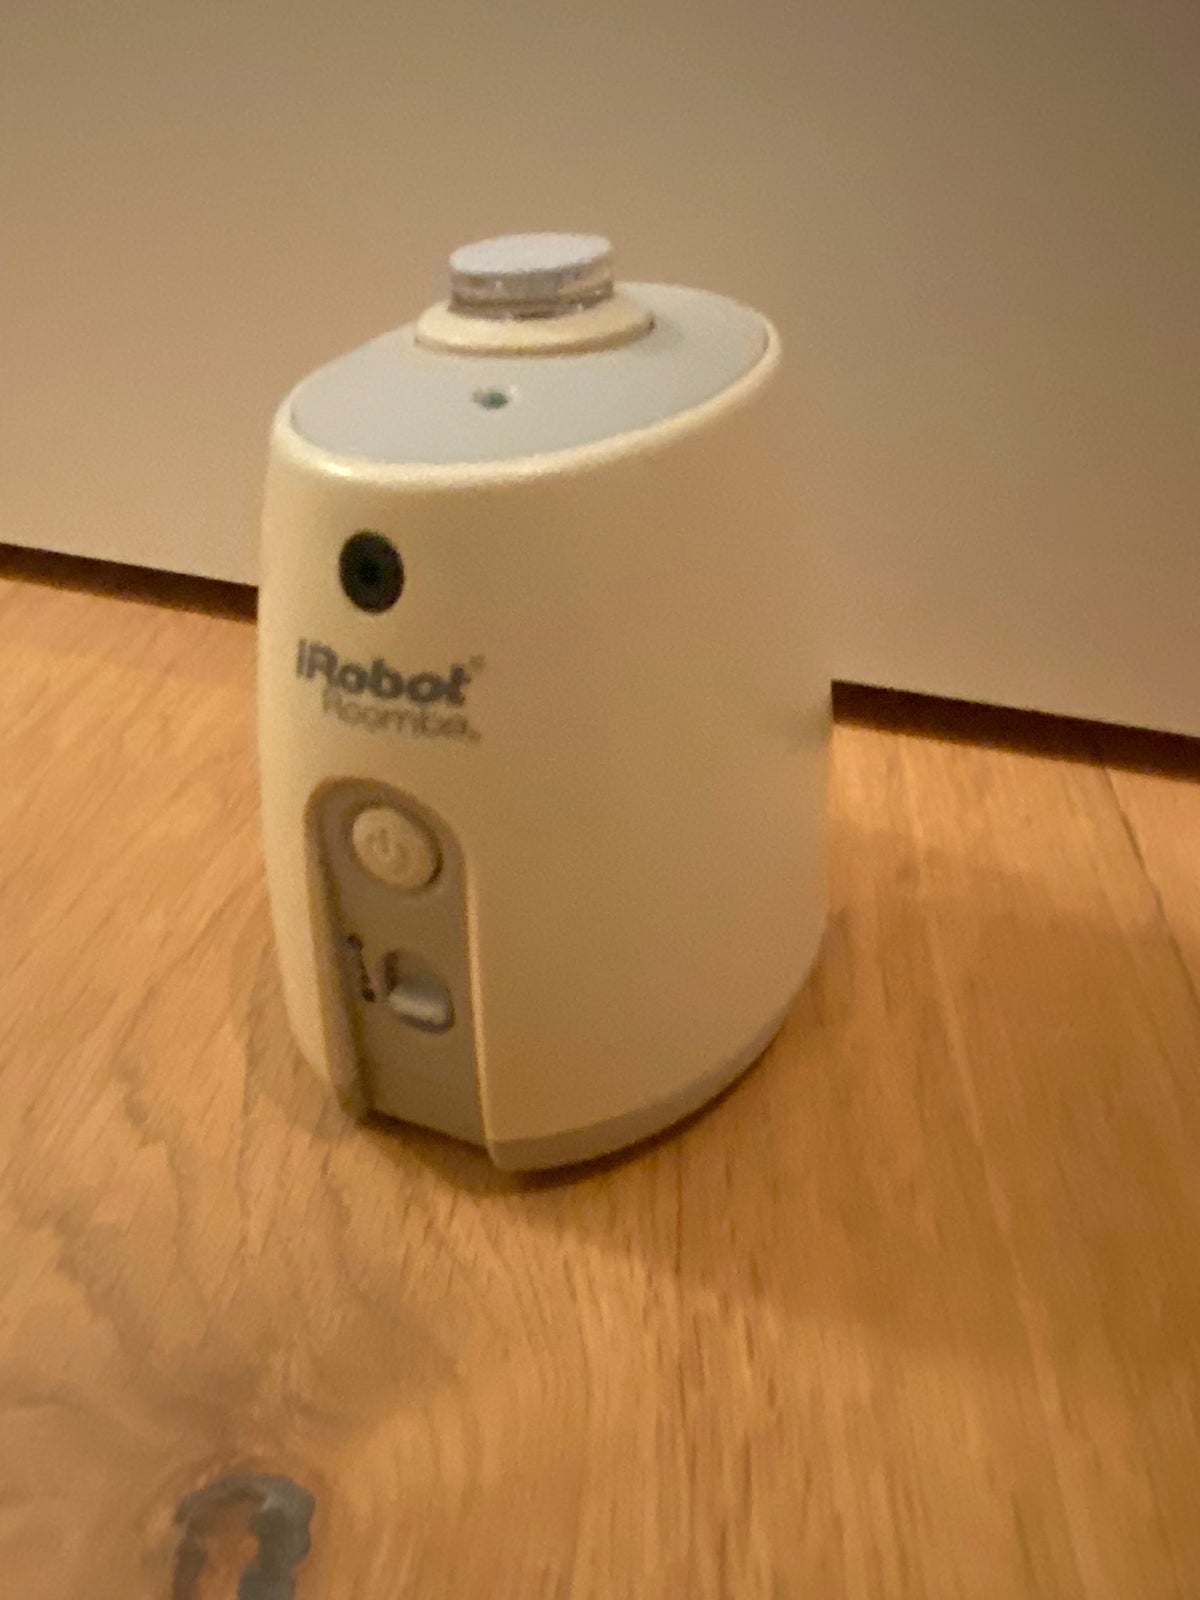 Robotstøvsuger, iRobot Roomba 530